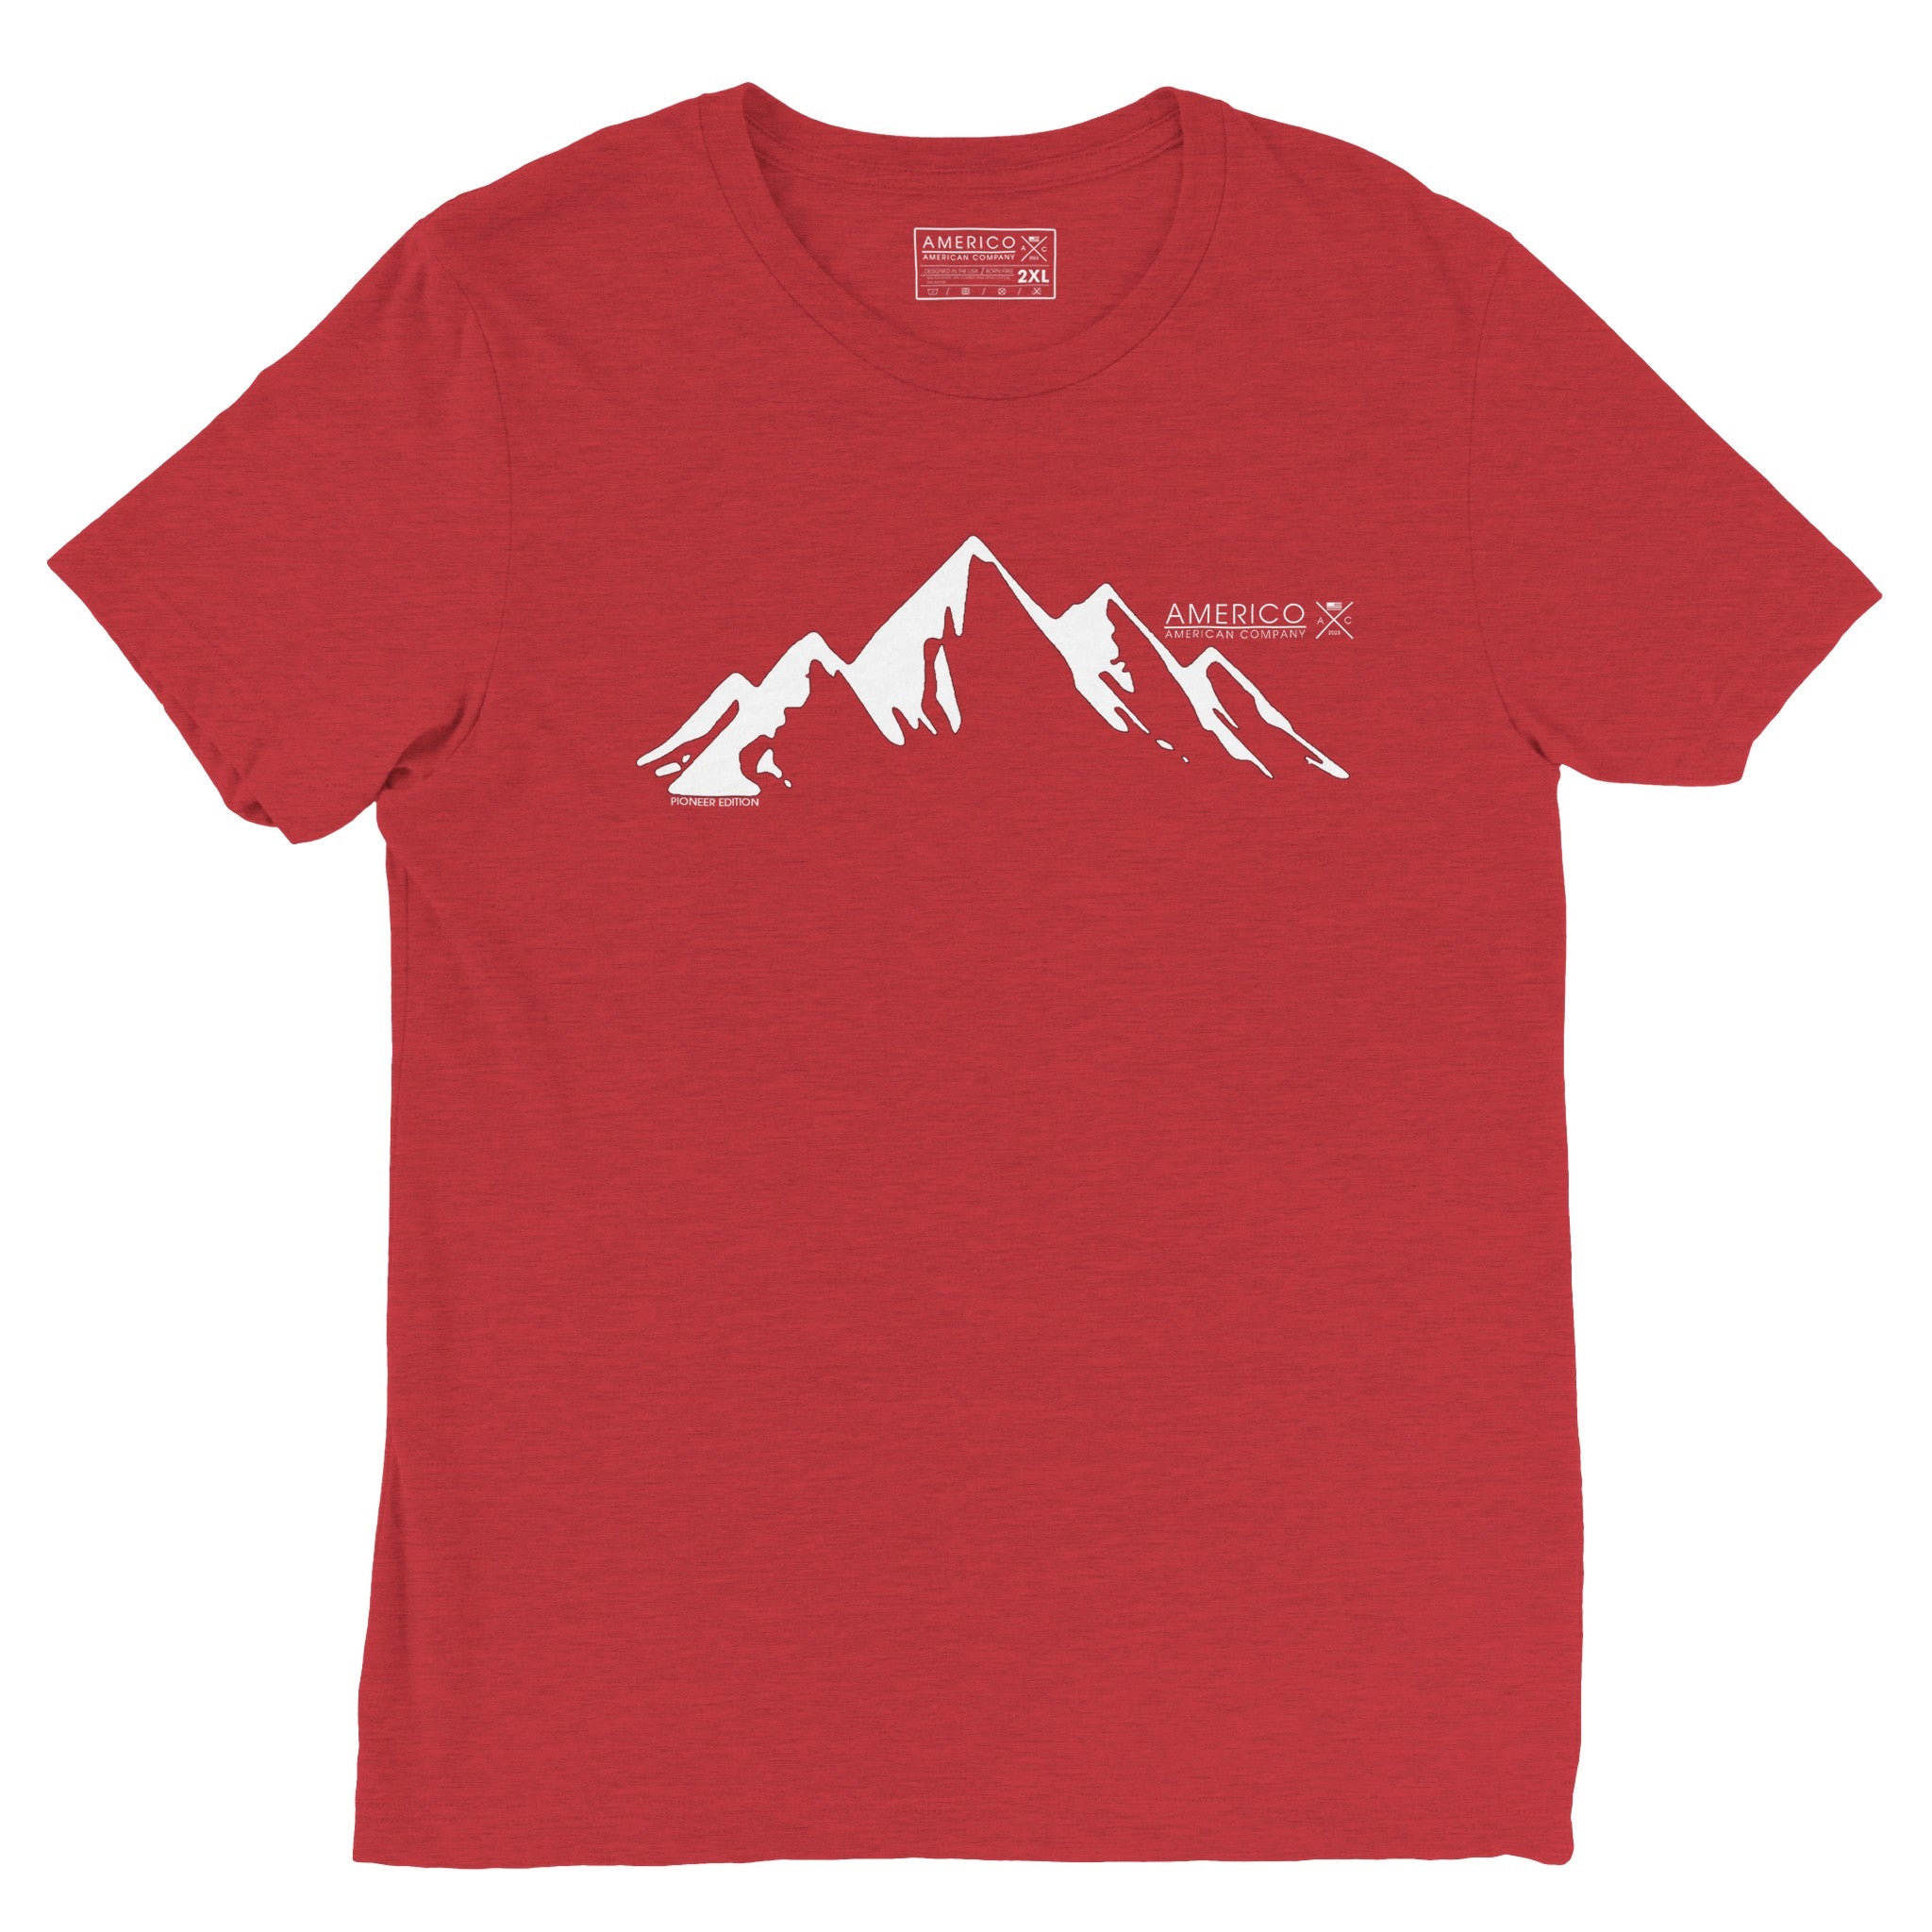 AC "PIONEER EDITION" TRI-Blend T-Shirt